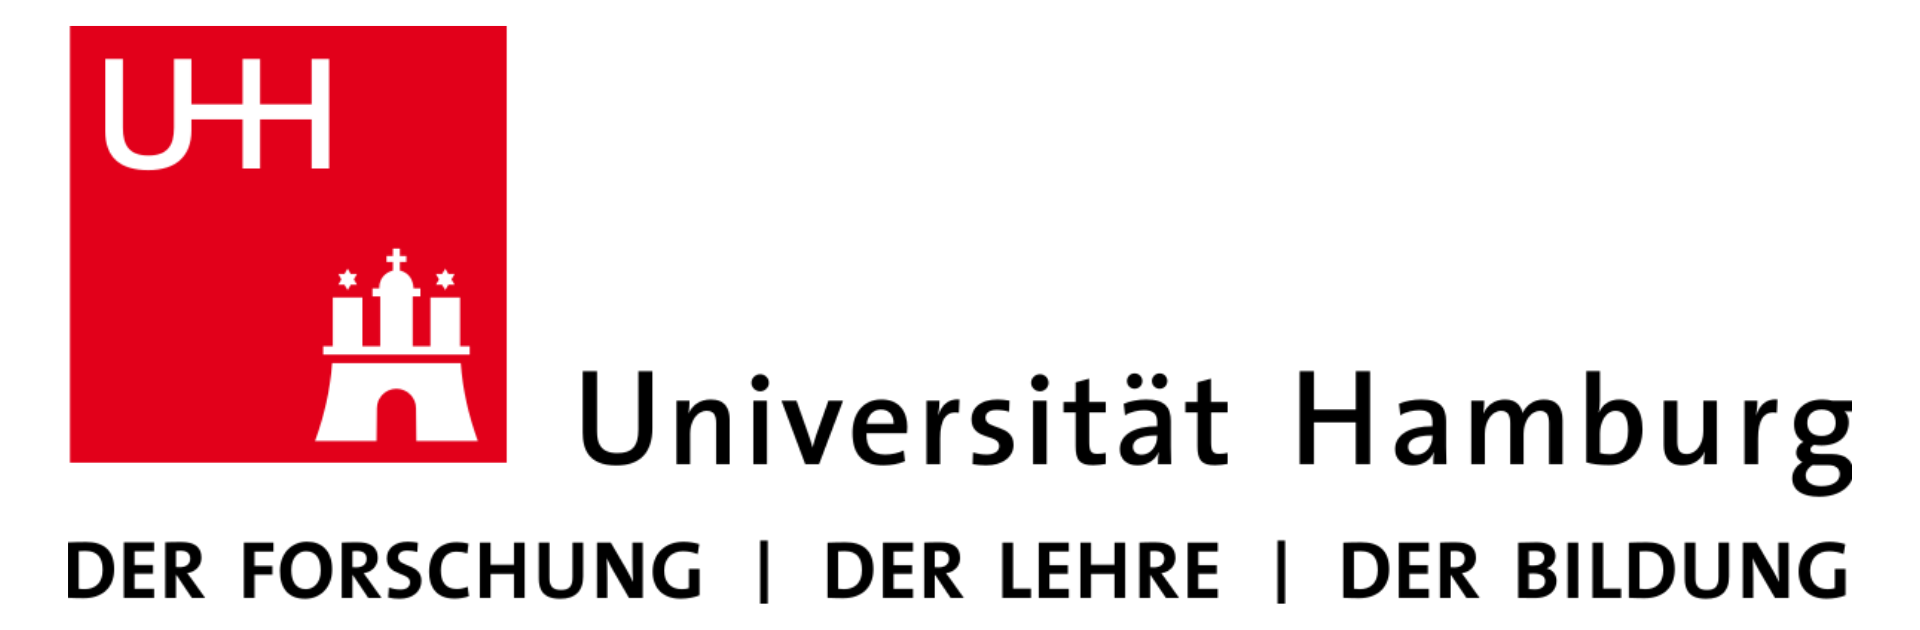 University of Hamburg 